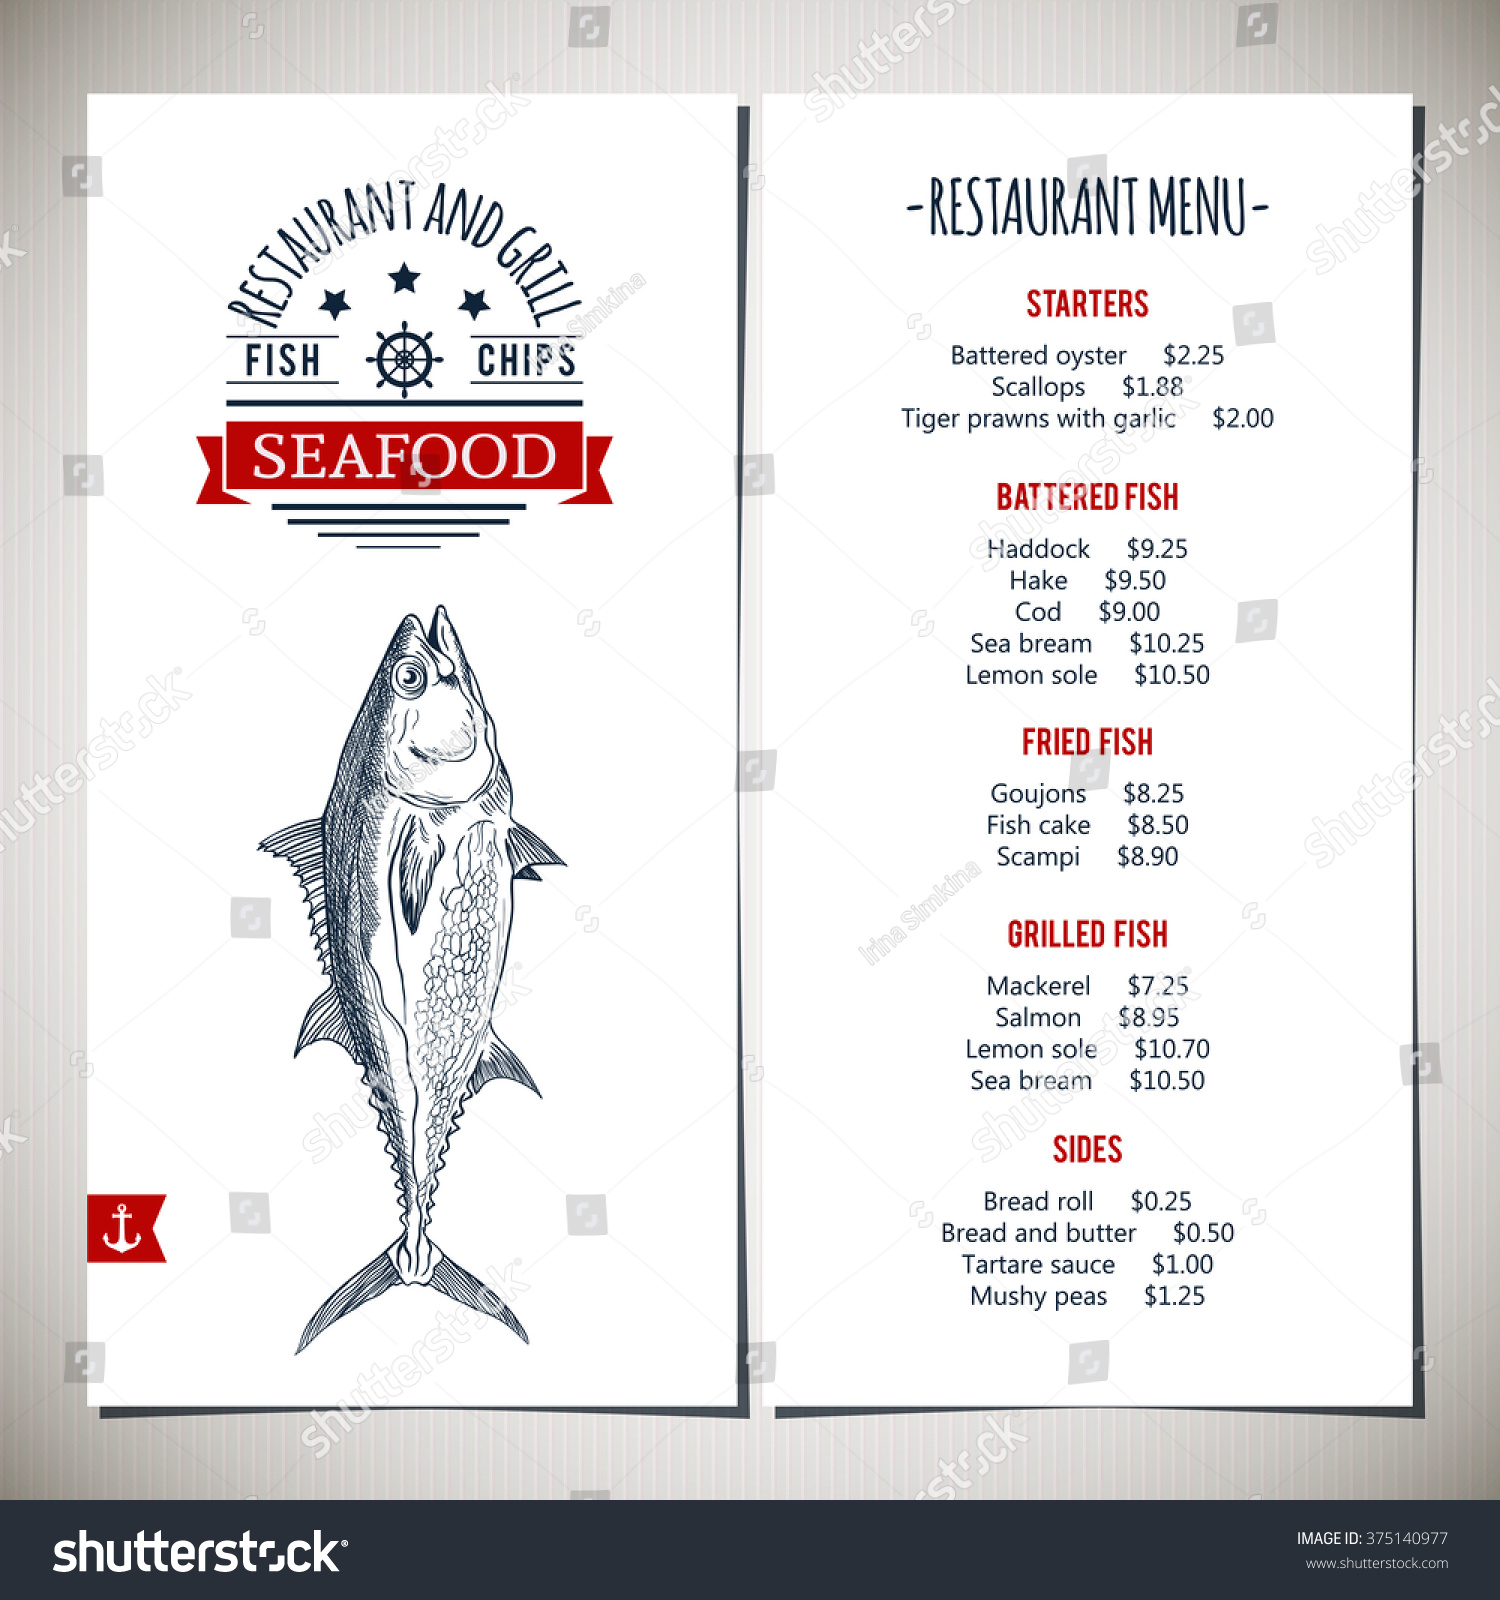 Tuna Fish Restaurant Menu Template Vector Stock Vector (Royalty Free ...